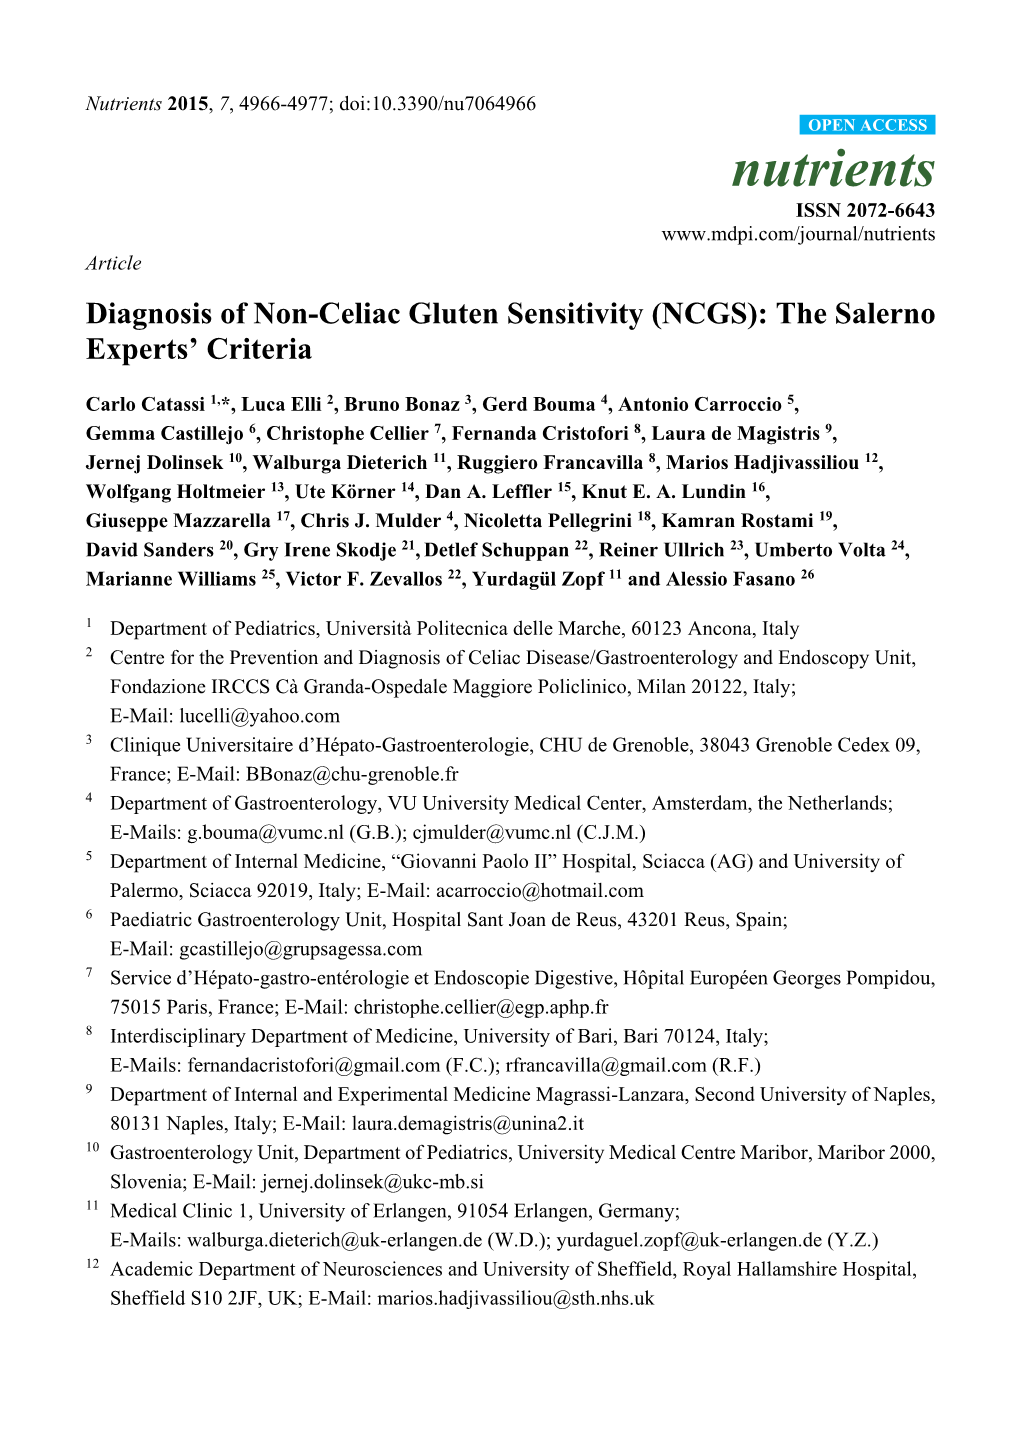 Diagnosis of Non-Celiac Gluten Sensitivity (NCGS): the Salerno Experts’ Criteria